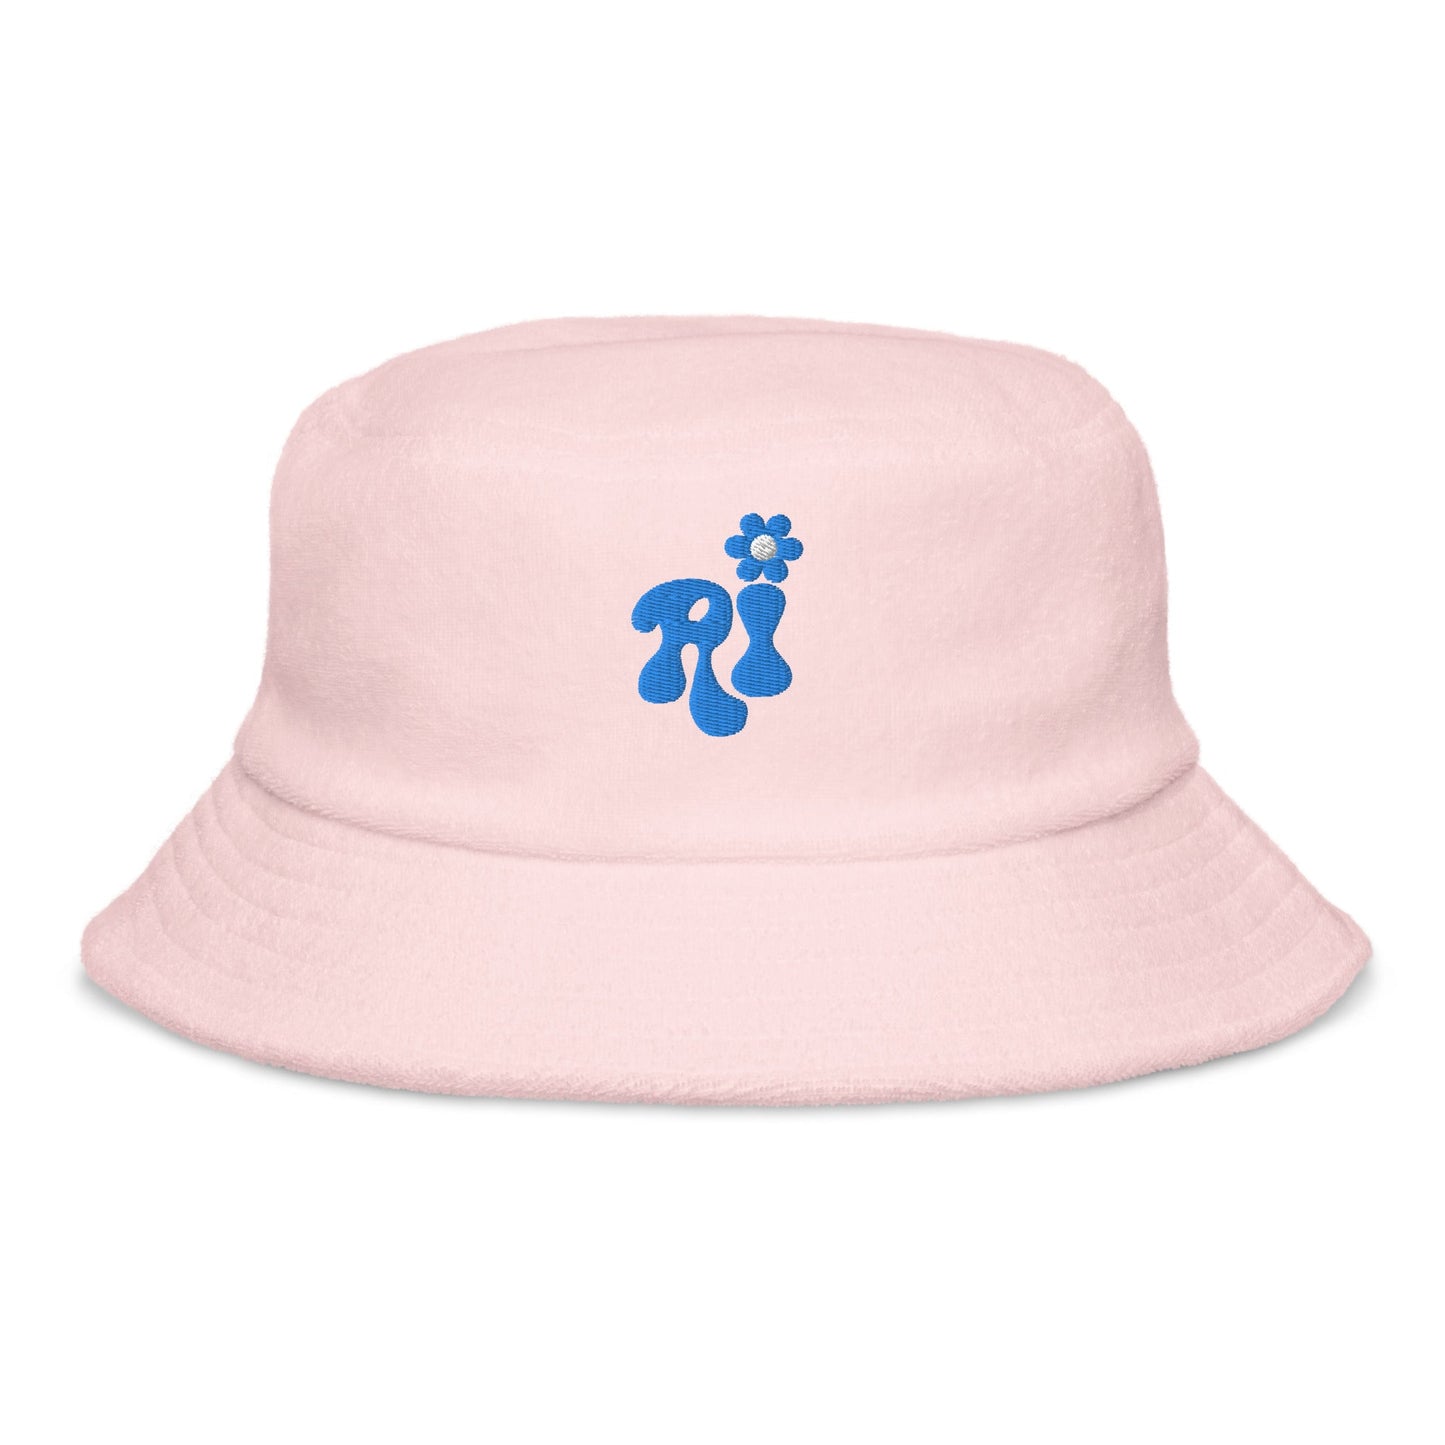 Rhode Island Bucket Hat